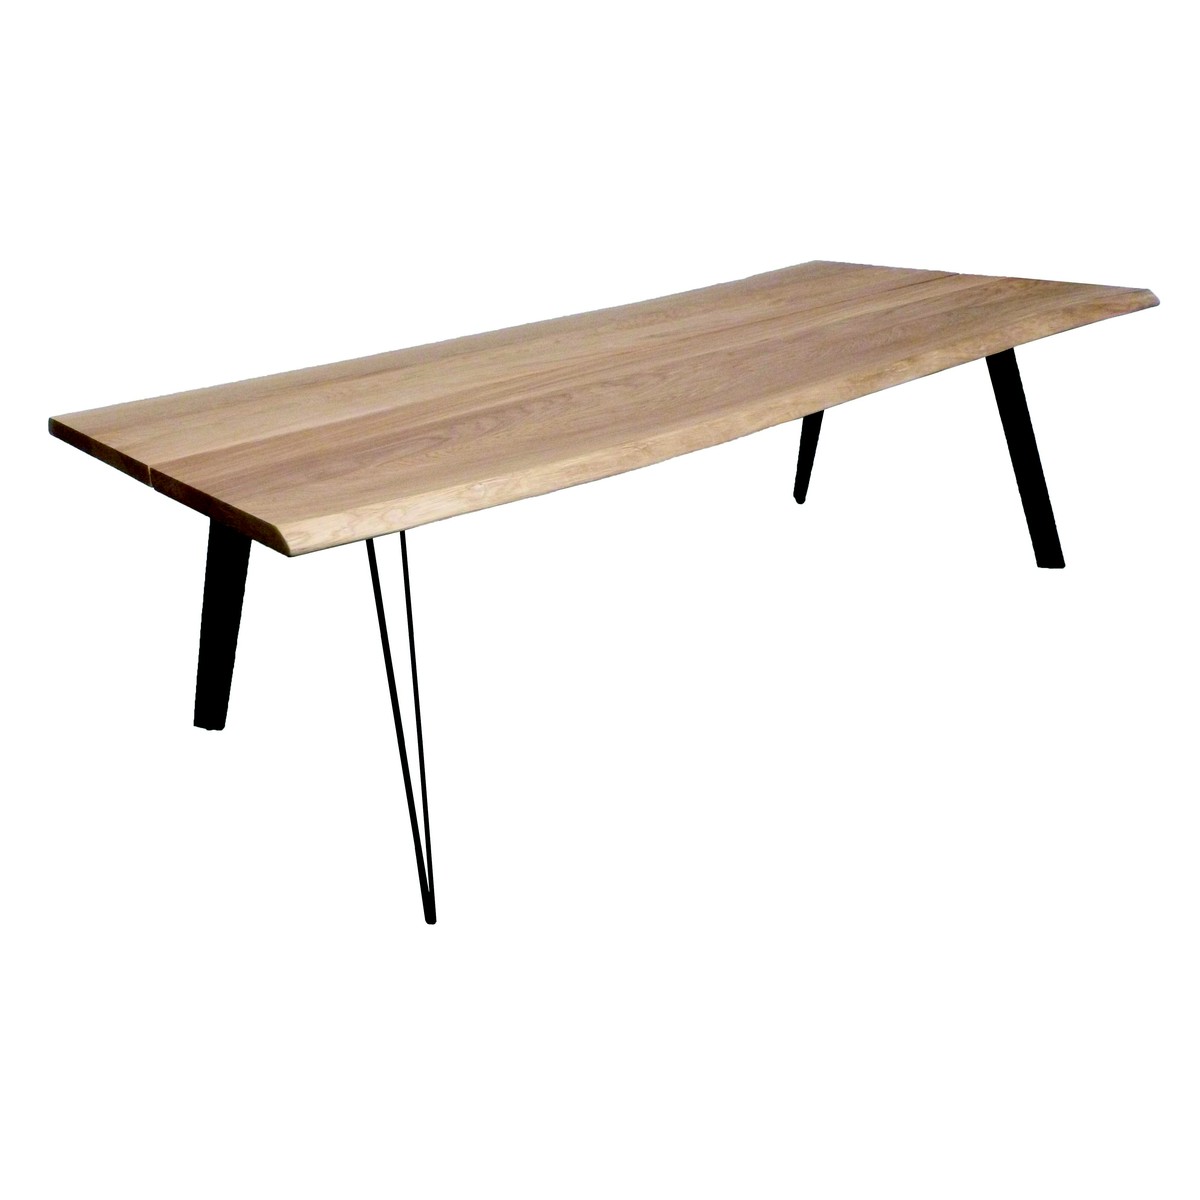   Table Keno Trunk ouverte rectangulaire  160x100x77cm